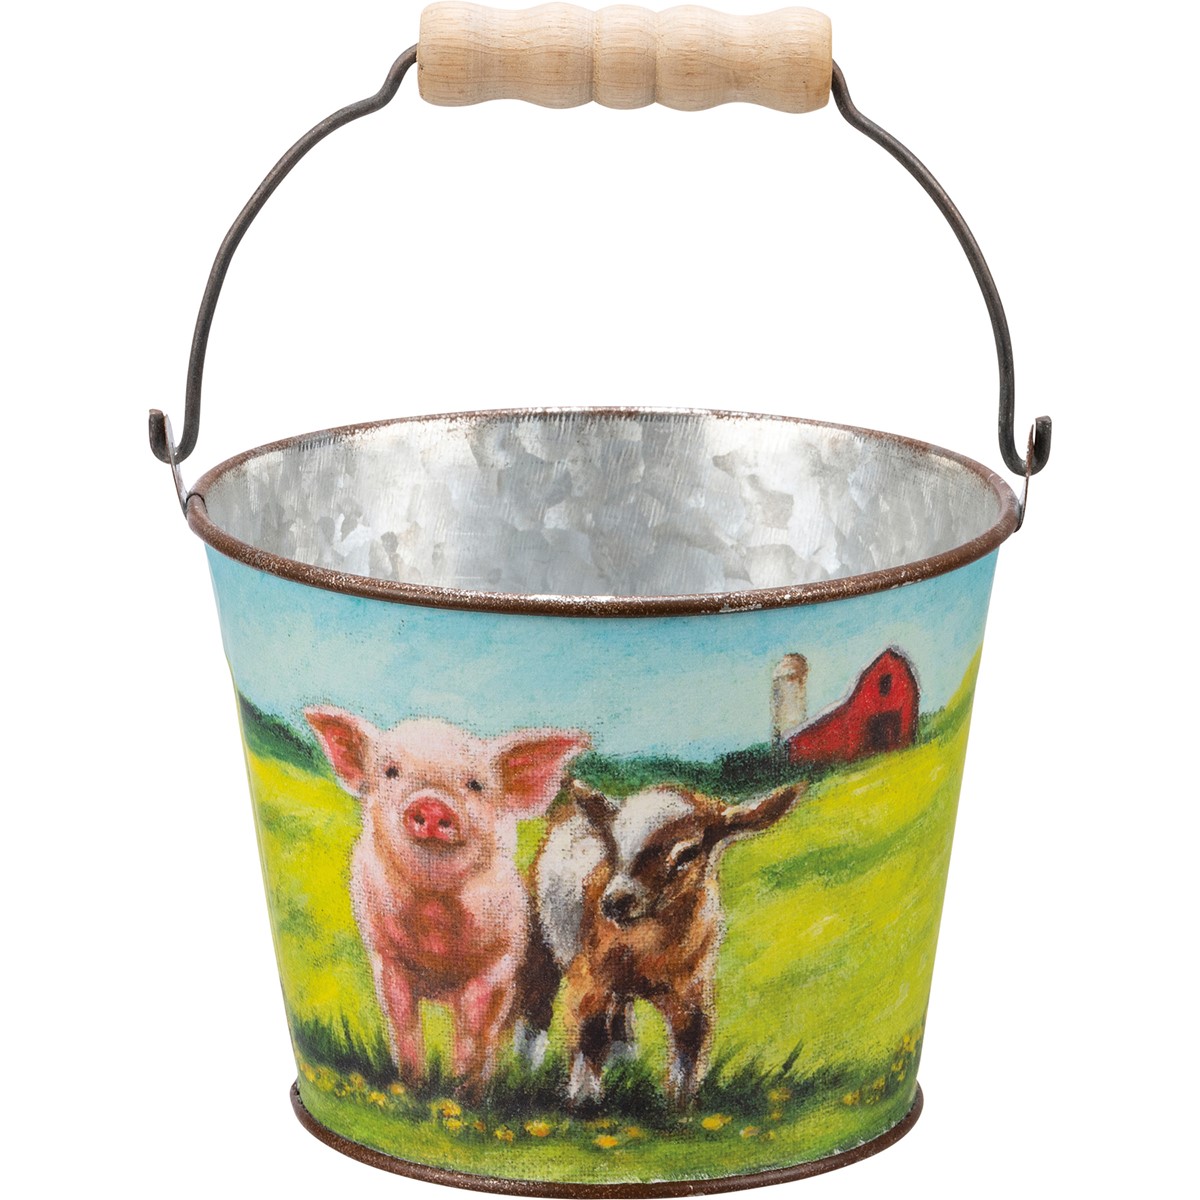 Farm Friends Bucket Set - Metal, Paper, Wood